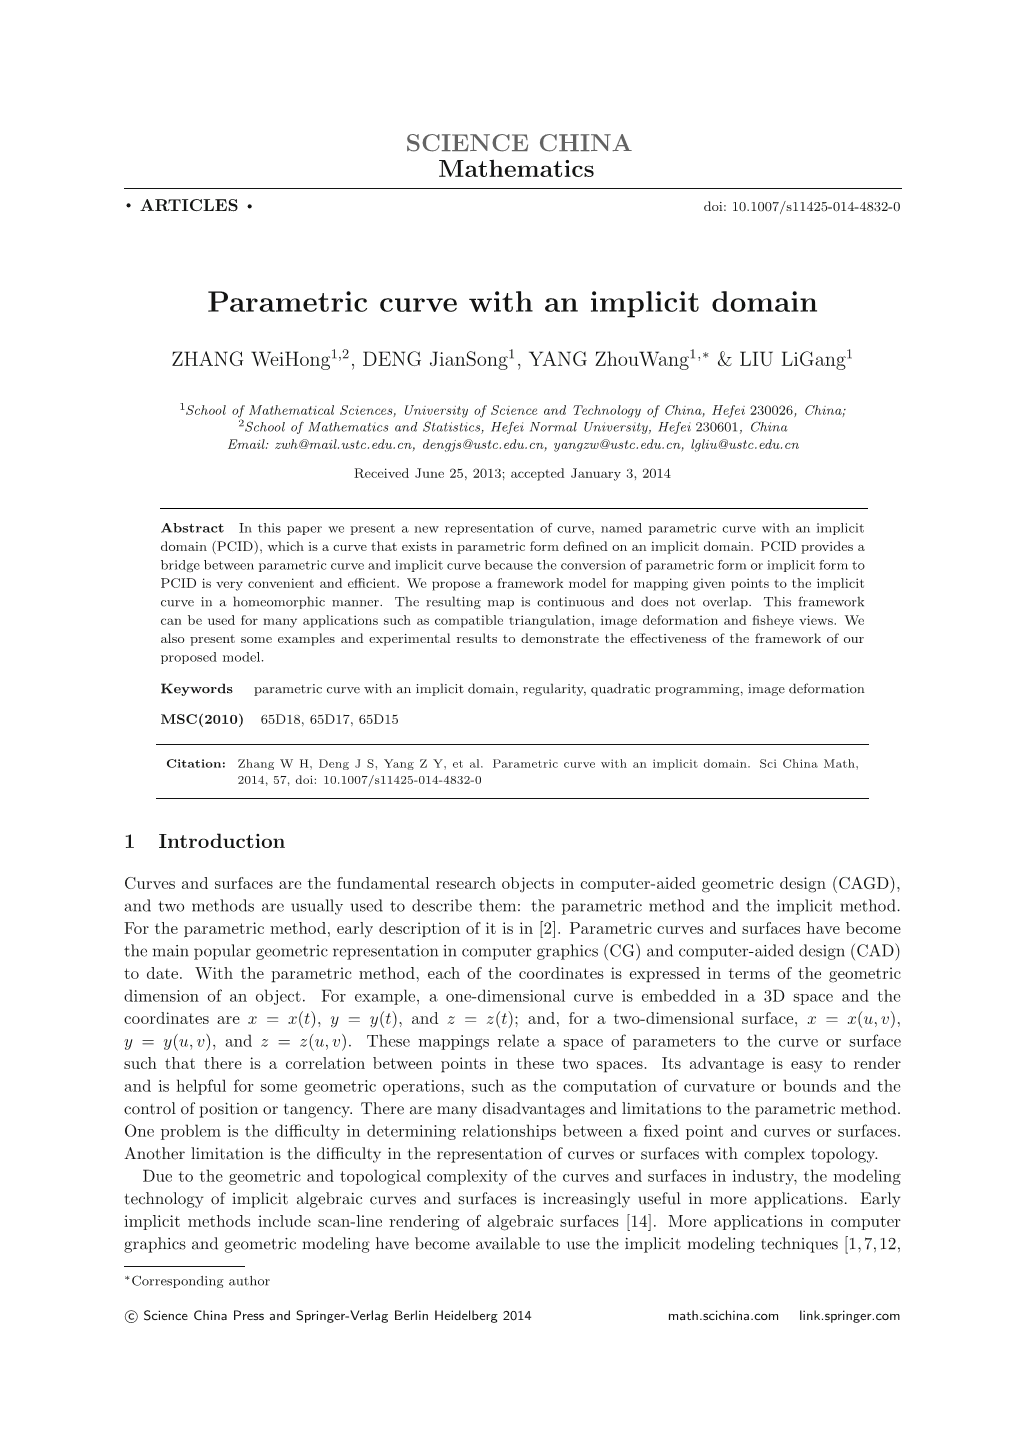 Parametric Curve with an Implicit Domain